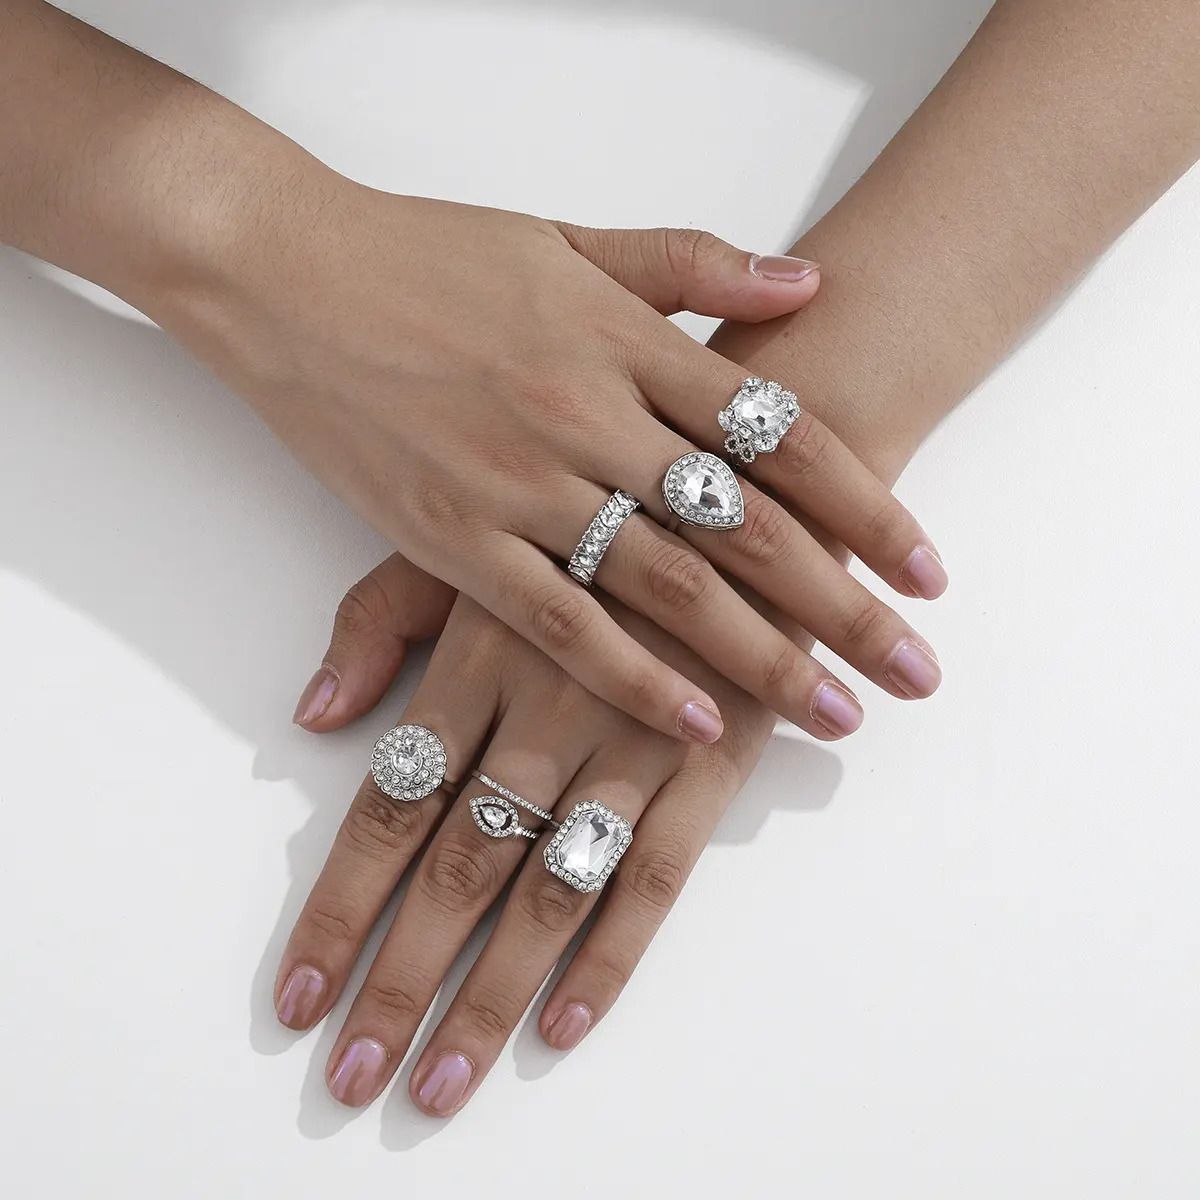 SHIXIN 6Pcs/Set Silver Jewelry Vintage Rhinestone Ring Natural Big Gemstone Ring Women Anello da donna CZ Crystal Wedding Rings